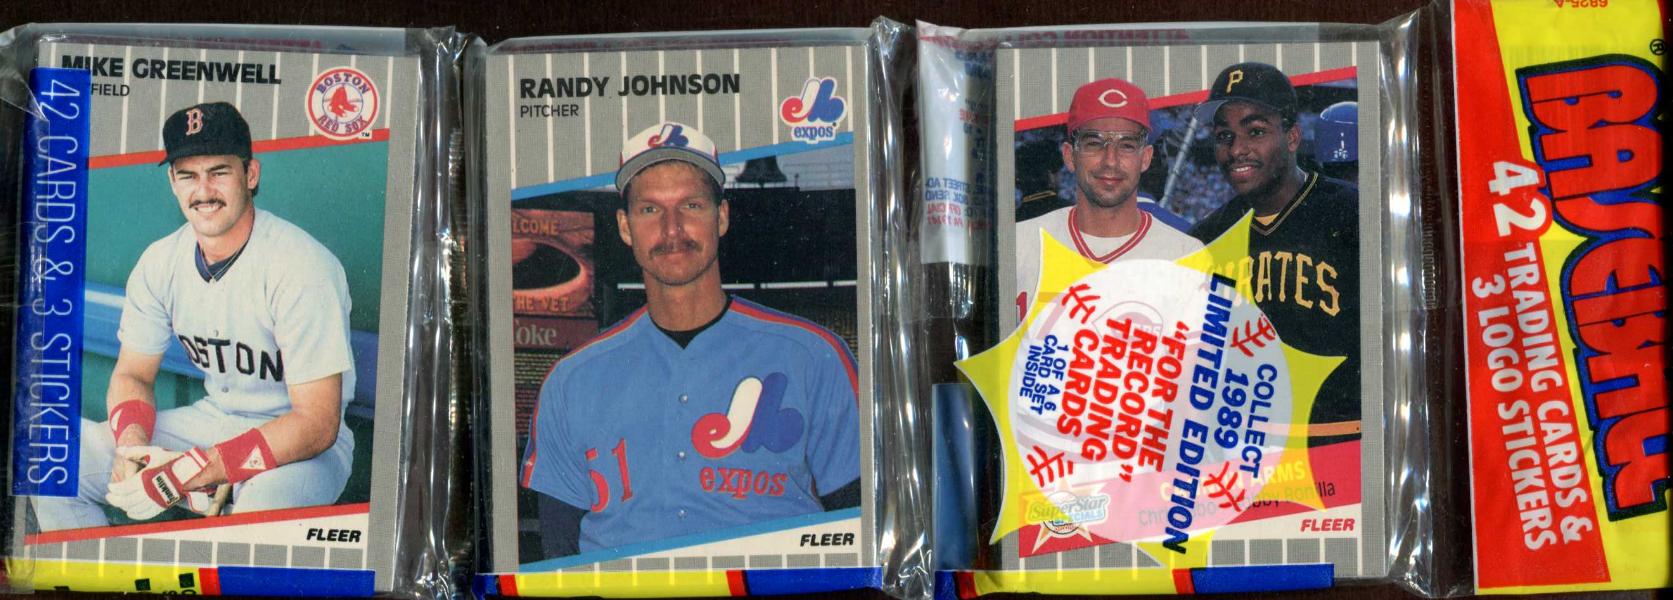 Sold at Auction: John Card, John Olerud rookie baseball card